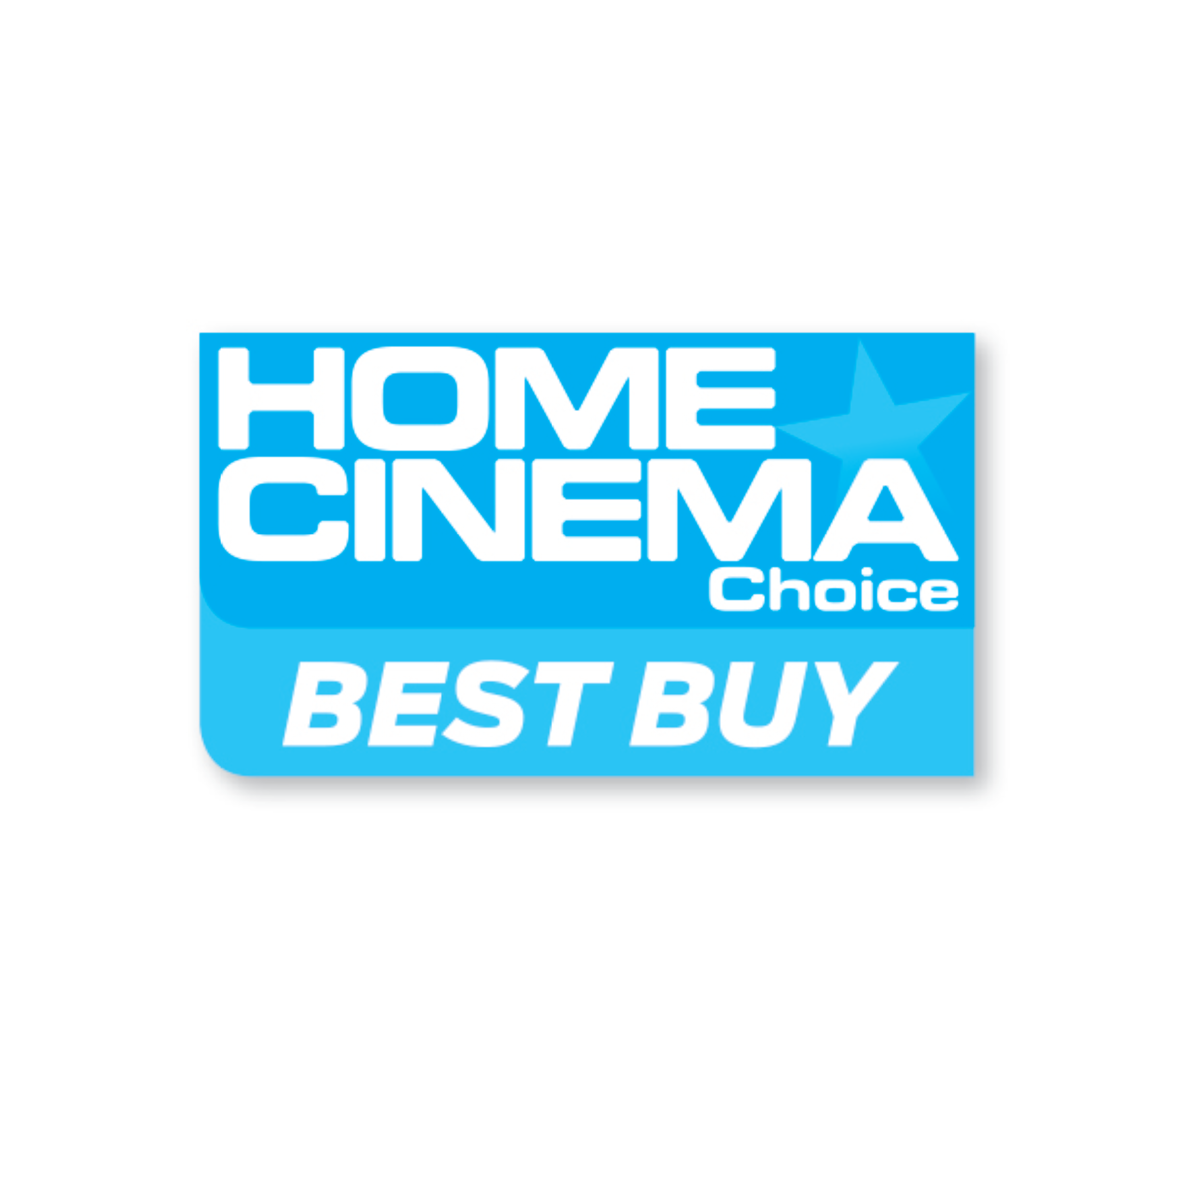 HOME CINEMA Choice: Best Buy